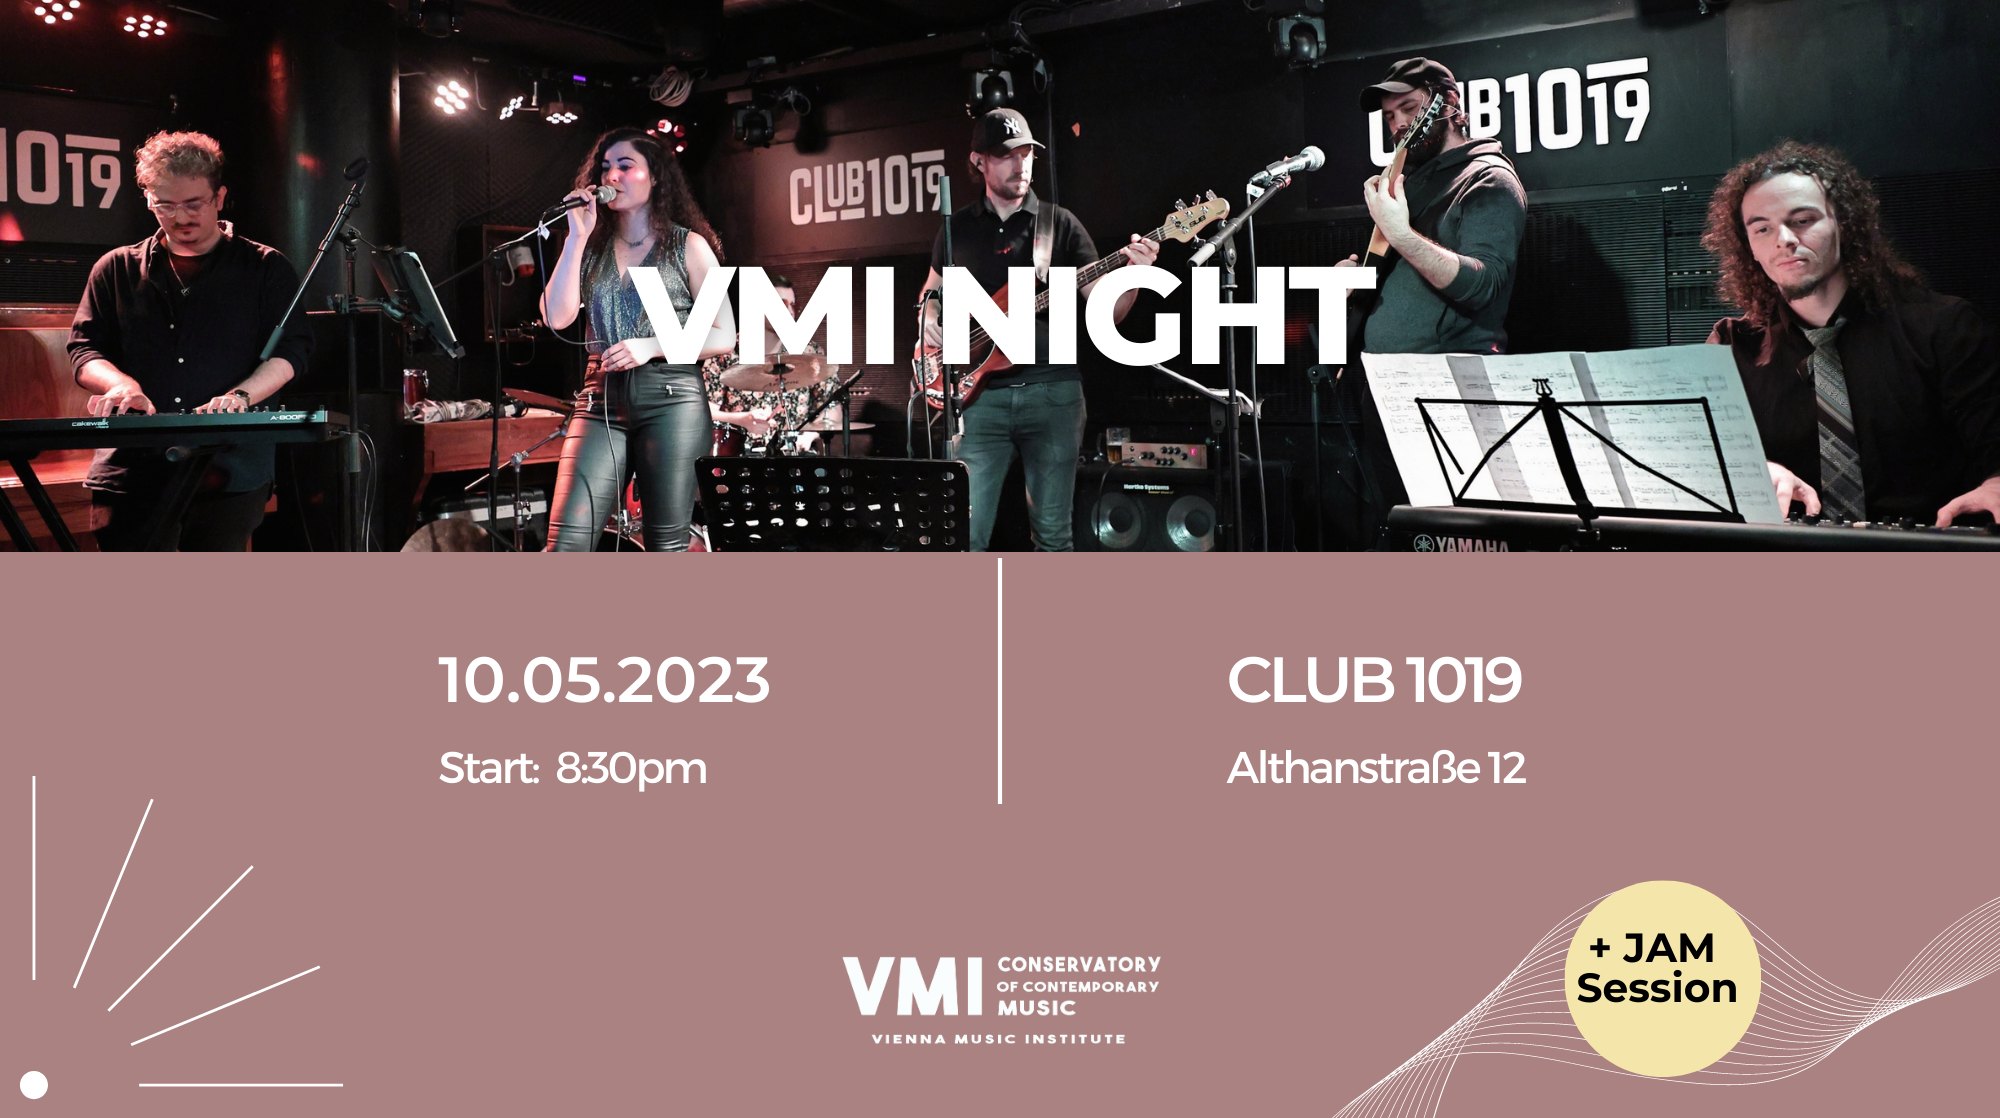 VMI Night am 10. May 2023 @ 1019 Jazzclub.